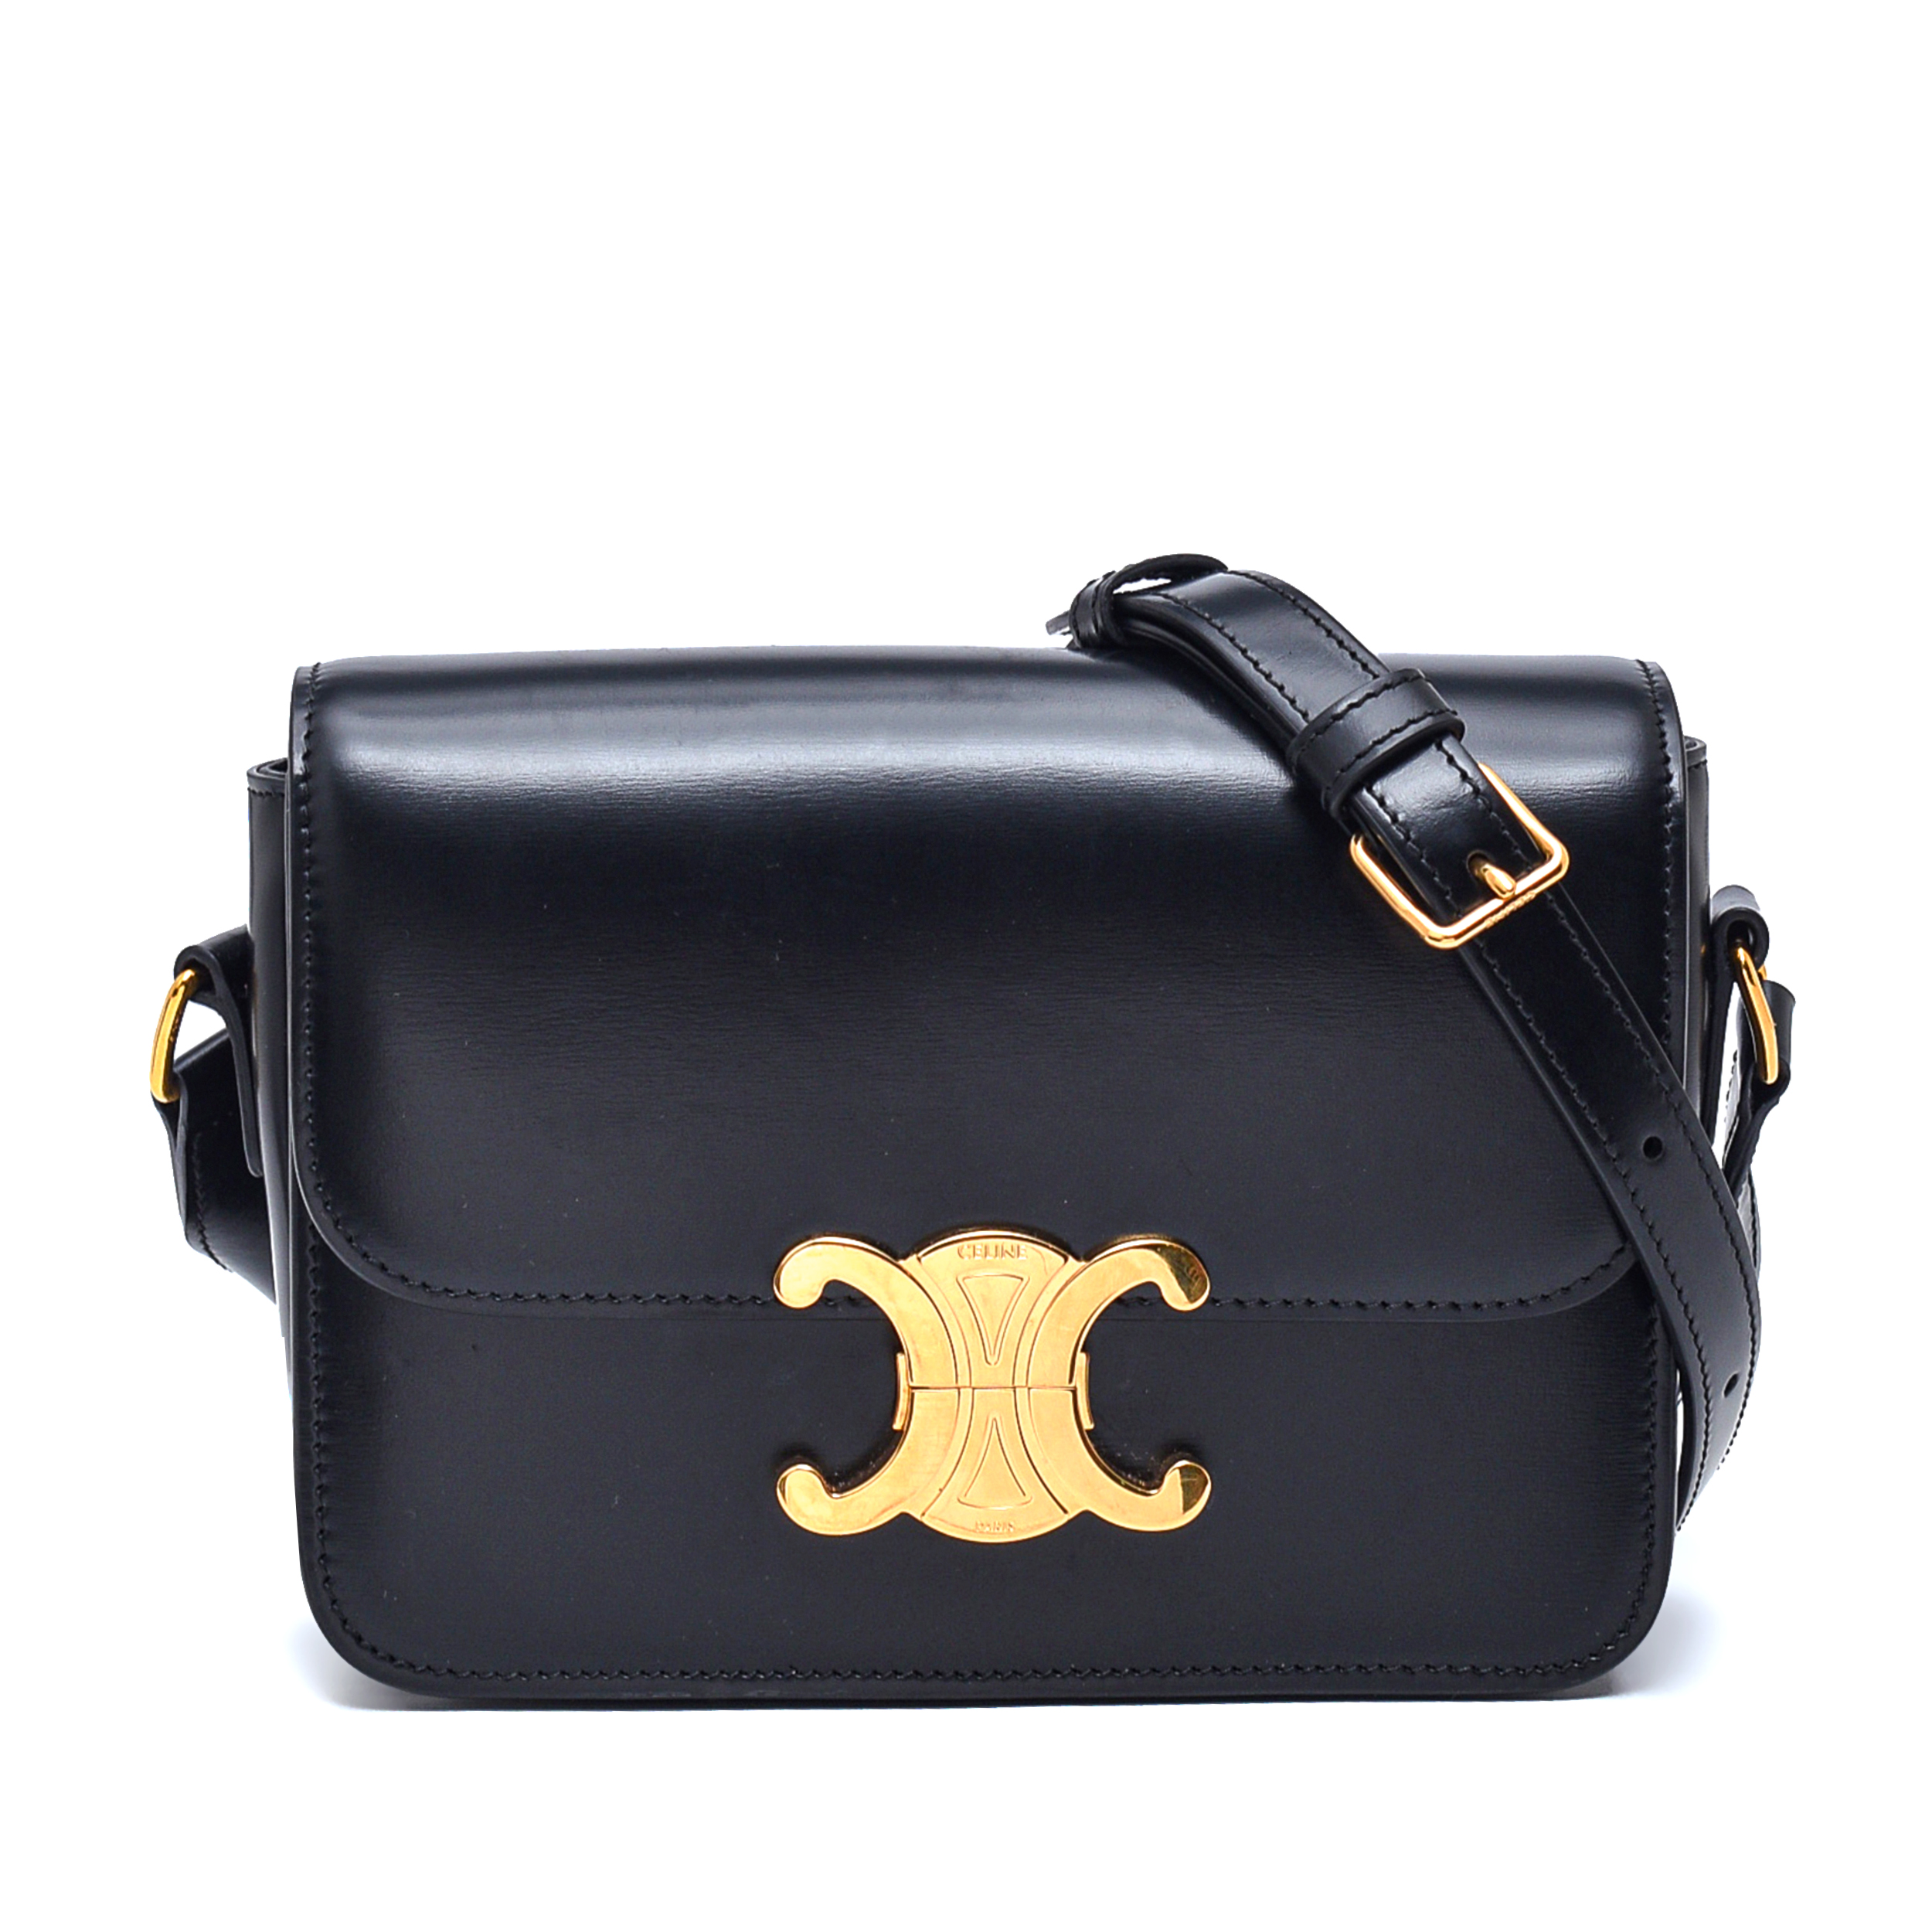 Celine - Black Shiny Leather Triomphe Box Bag